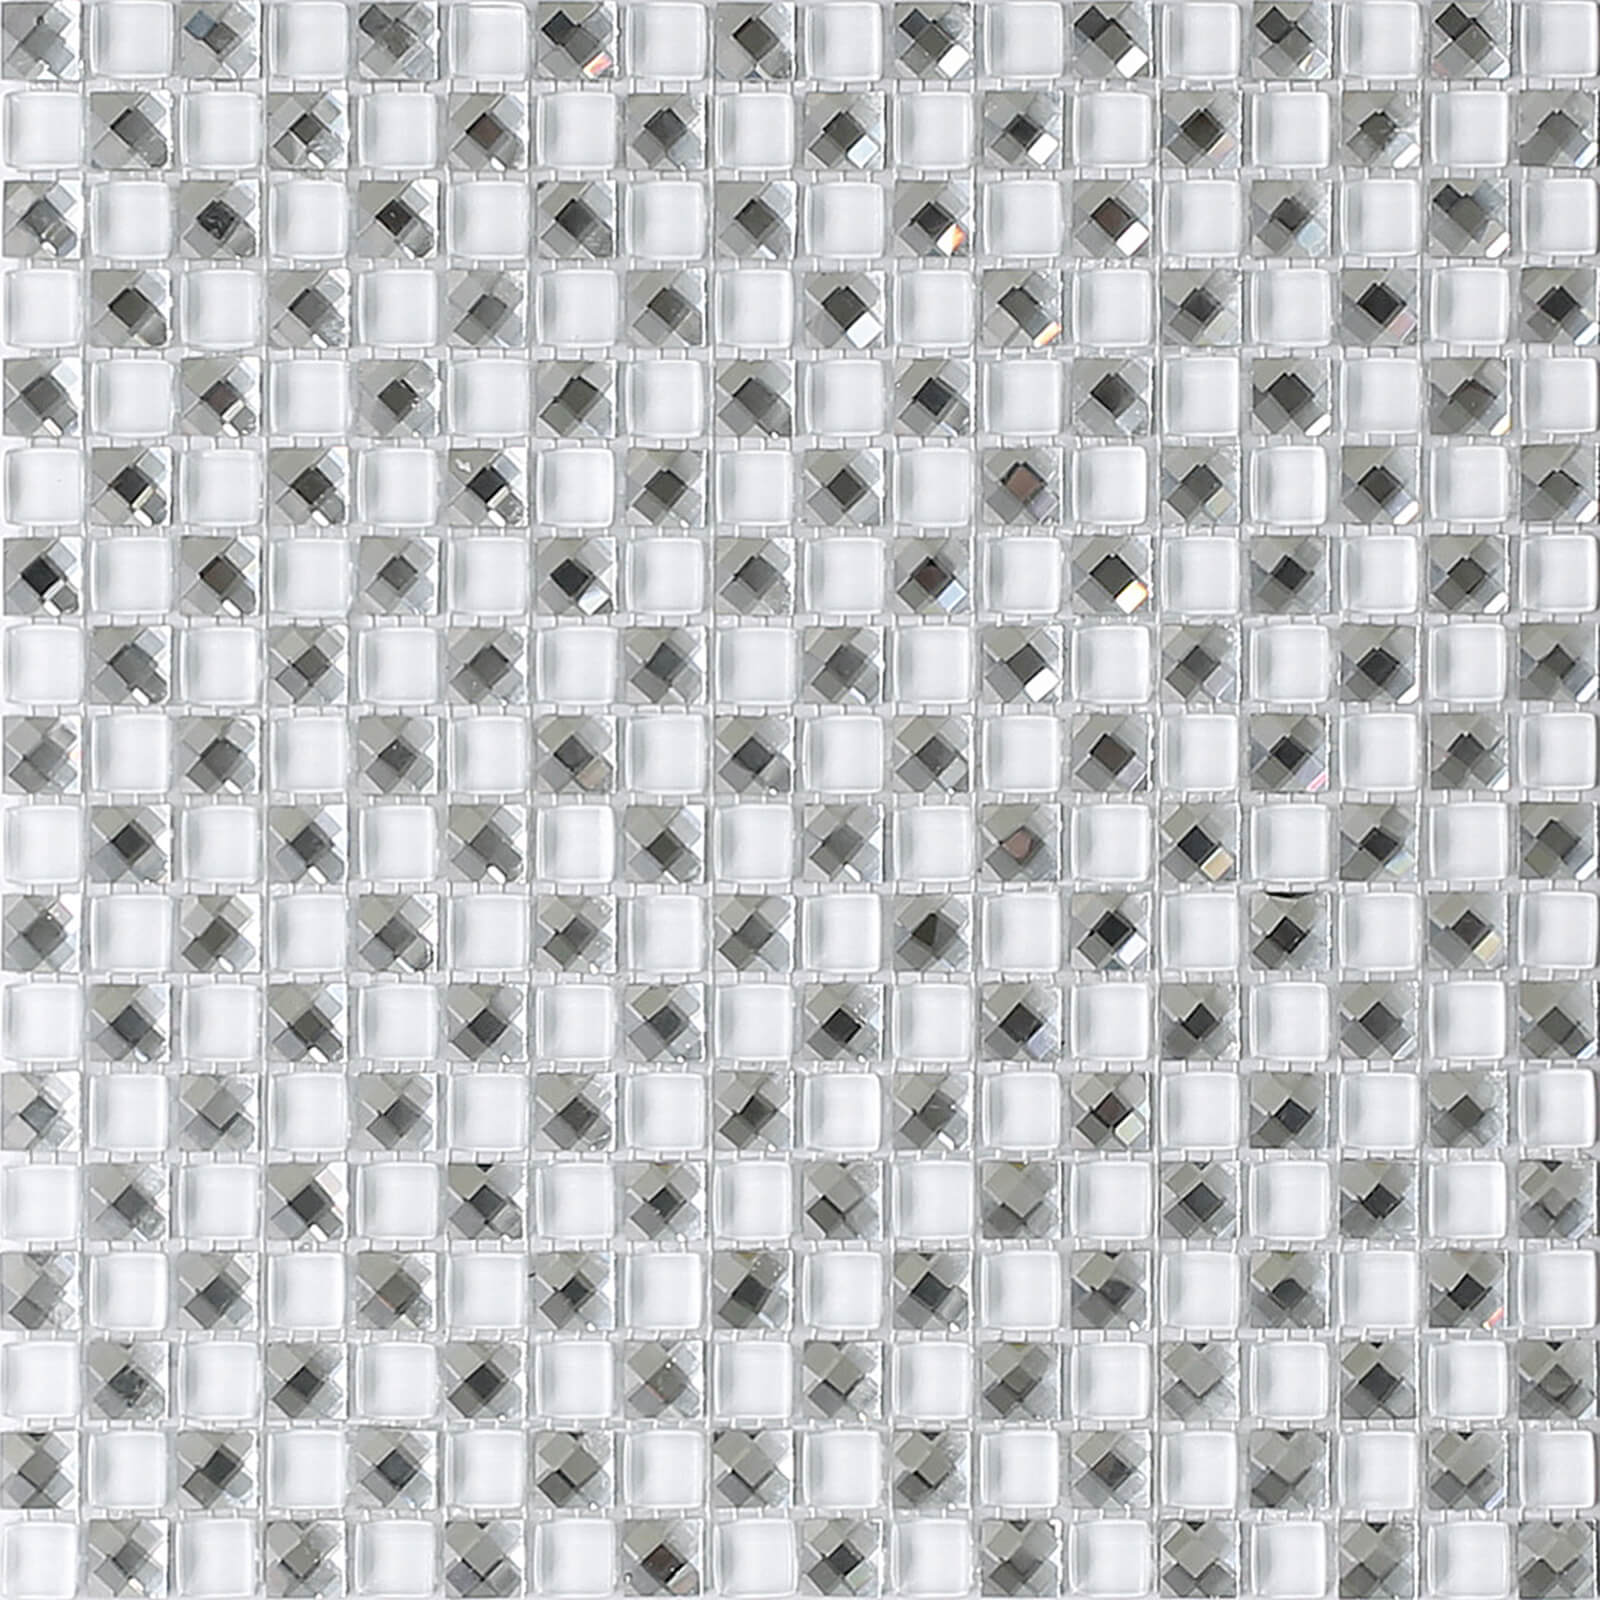 House of Mosaics White Jewel Mosaic Tile - 300 x 300mm